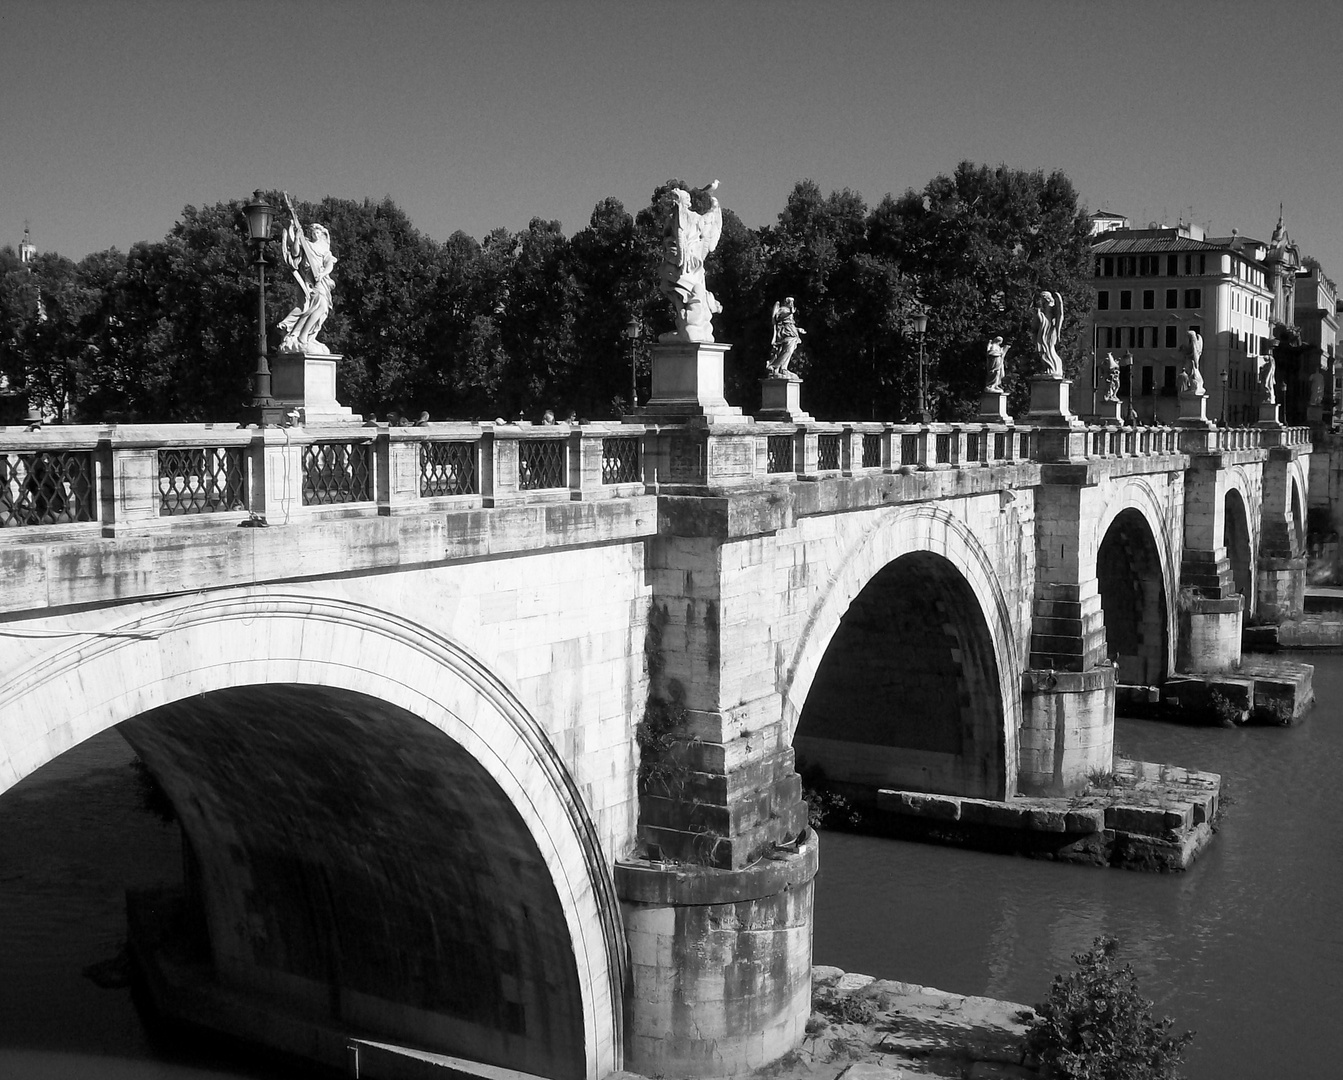 Ponte Sant' Angelo